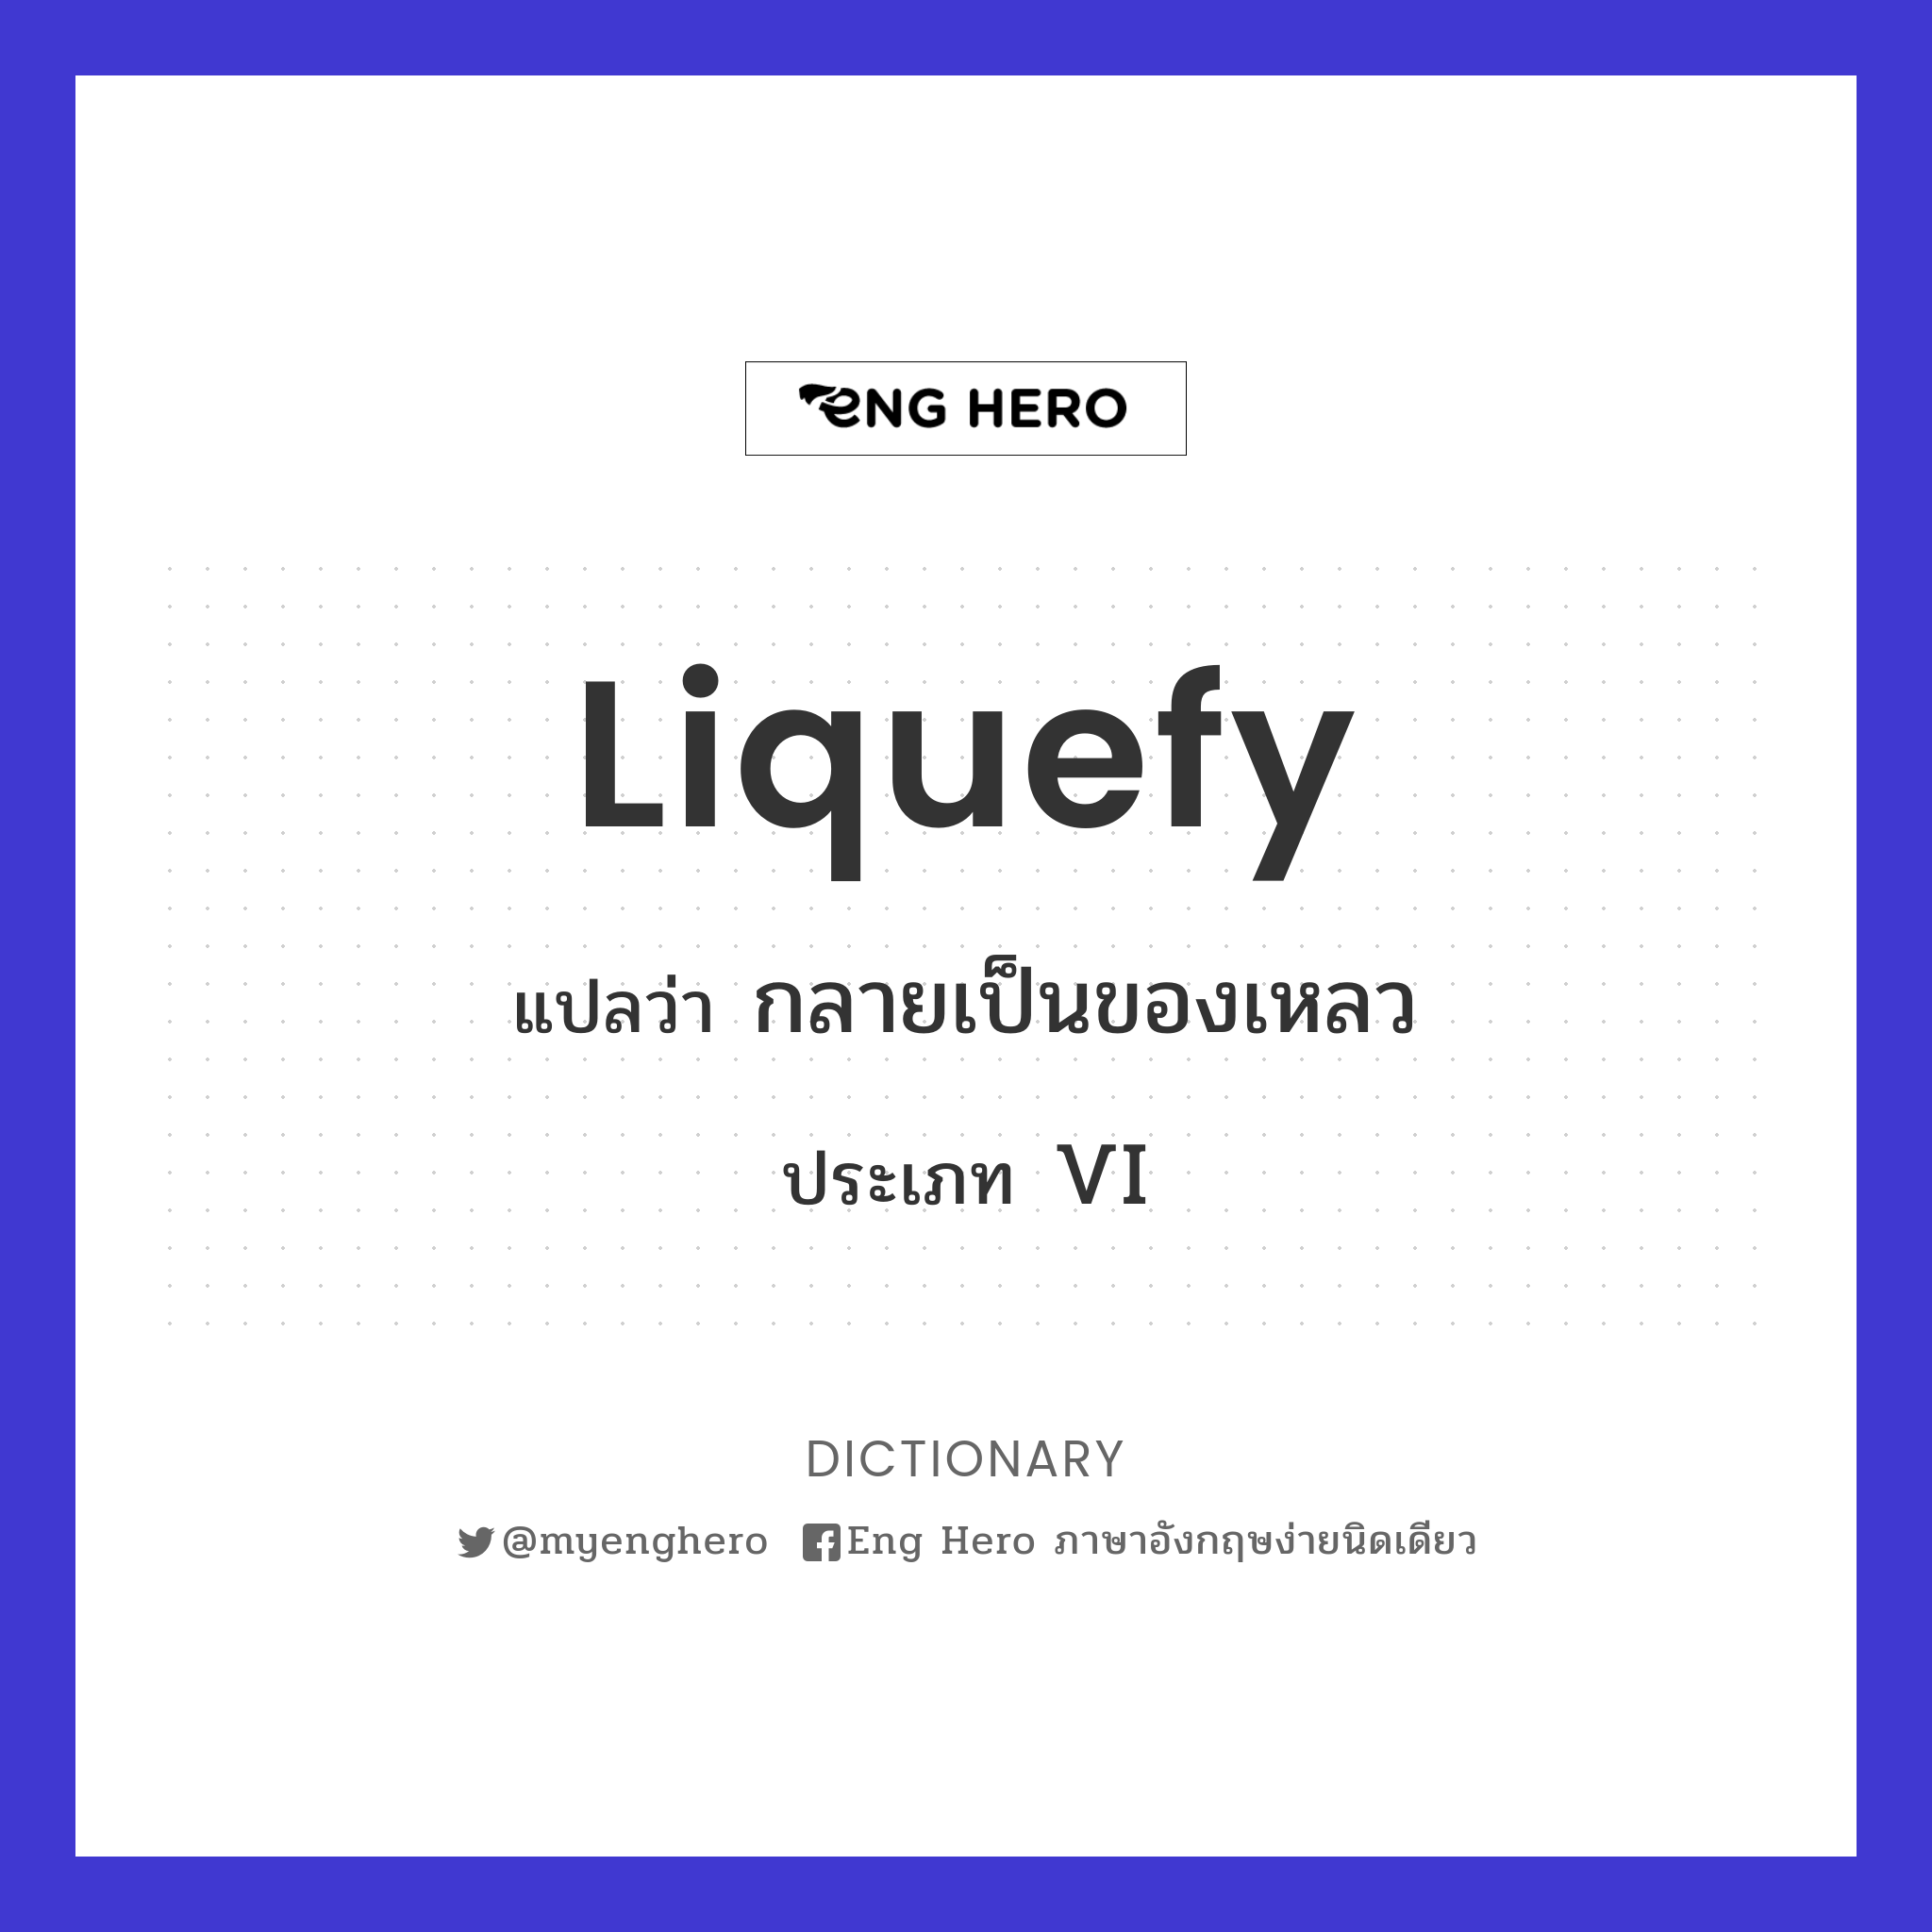 liquefy